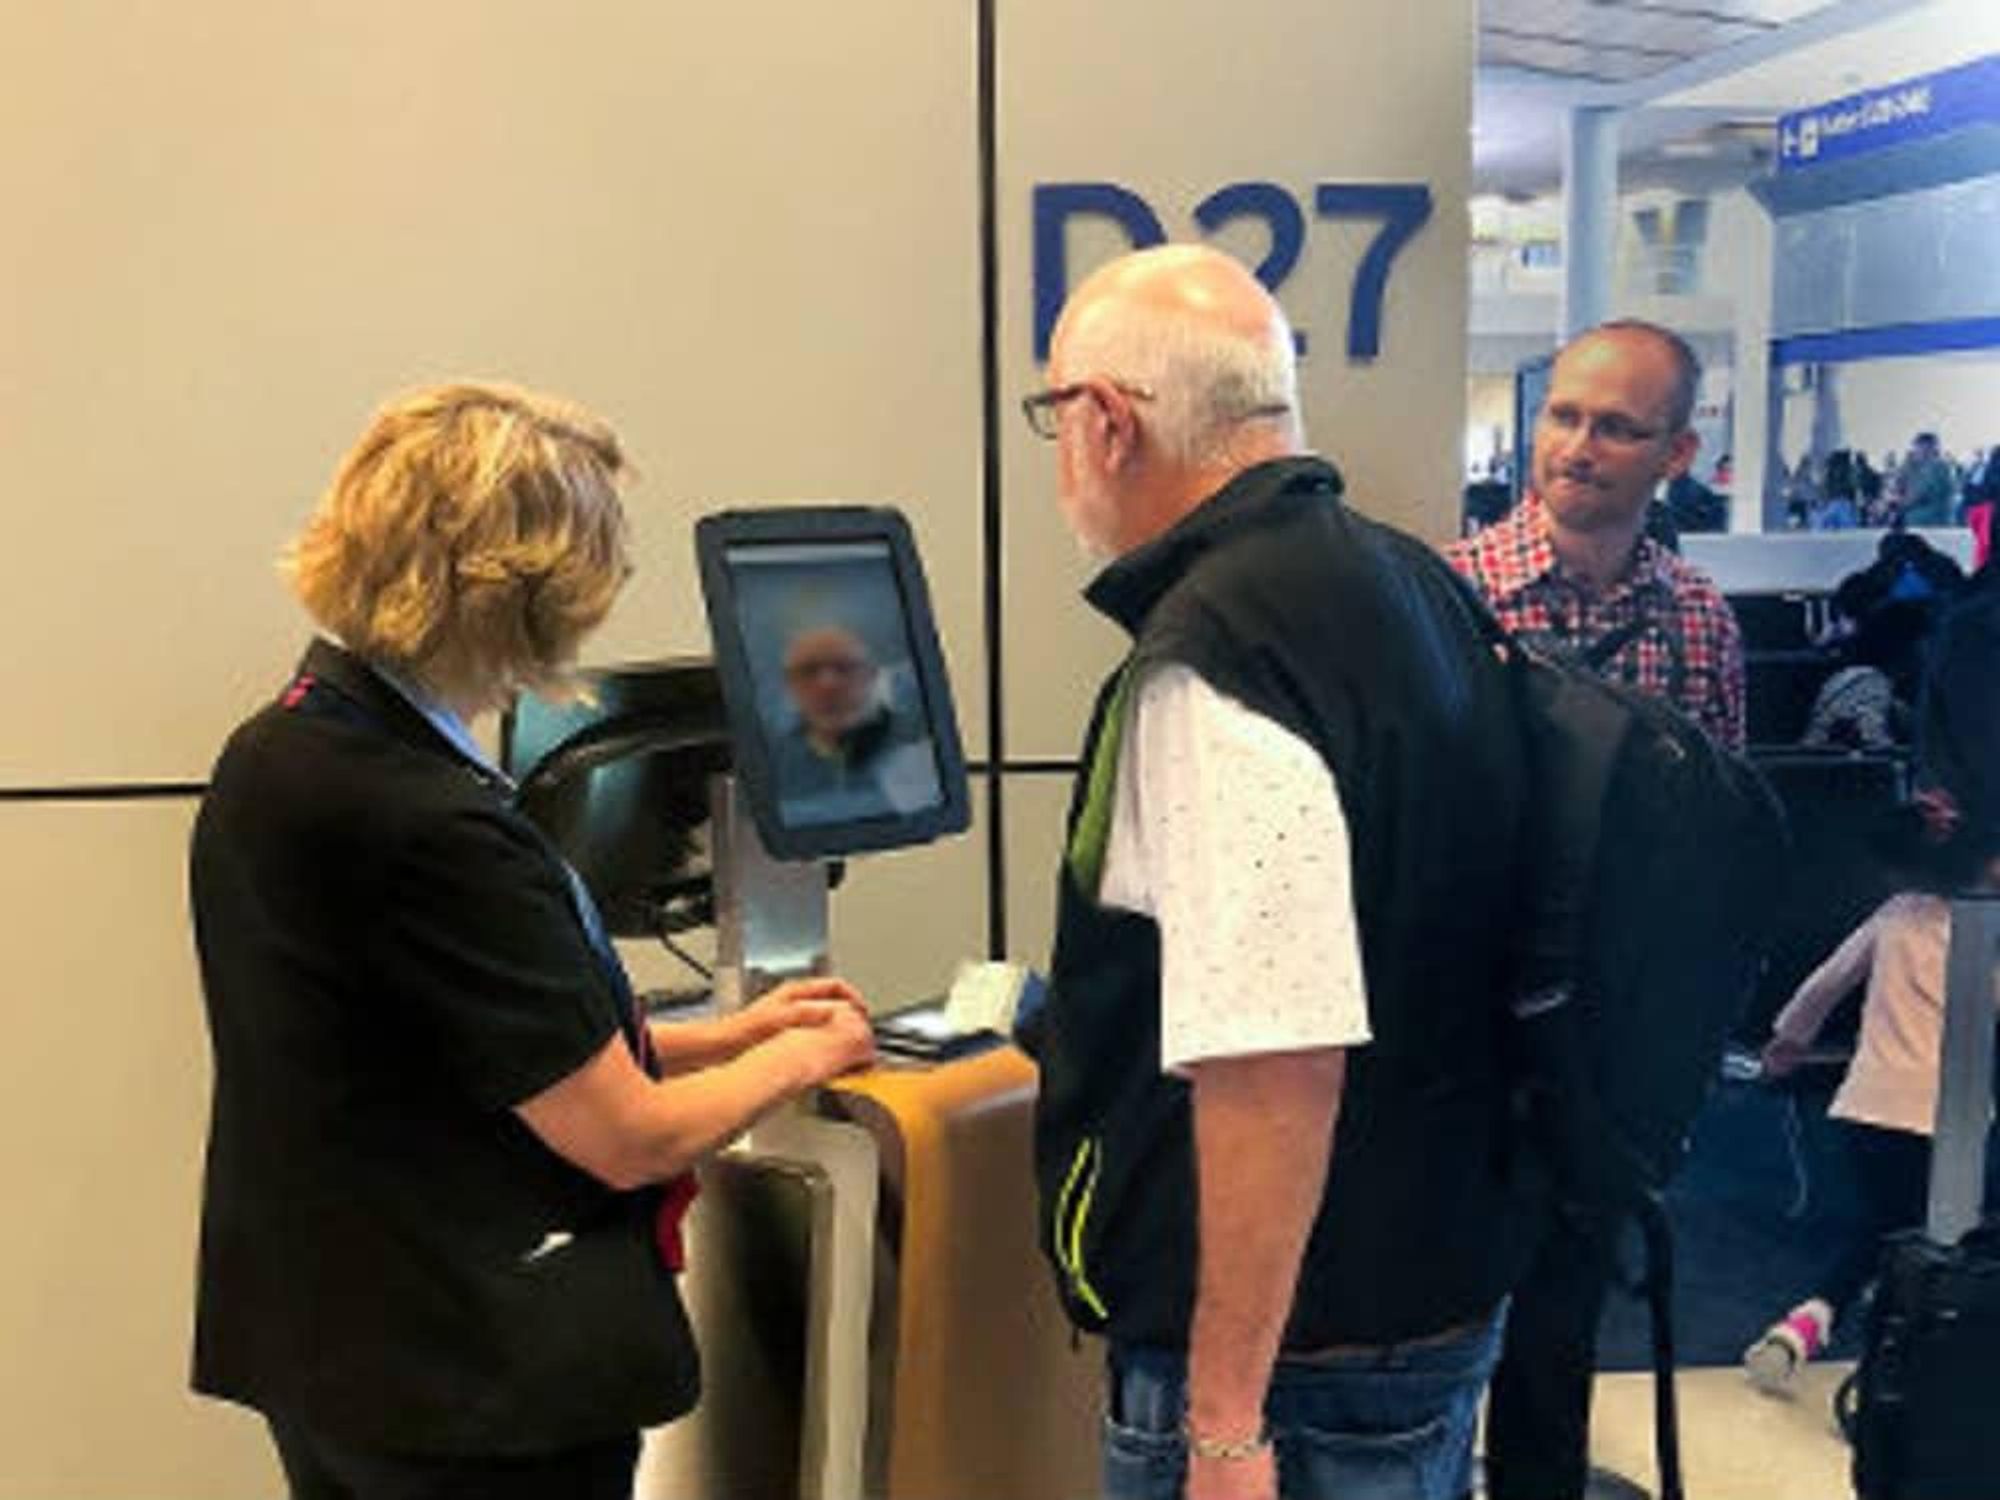 American Airlines biometric facial scanning